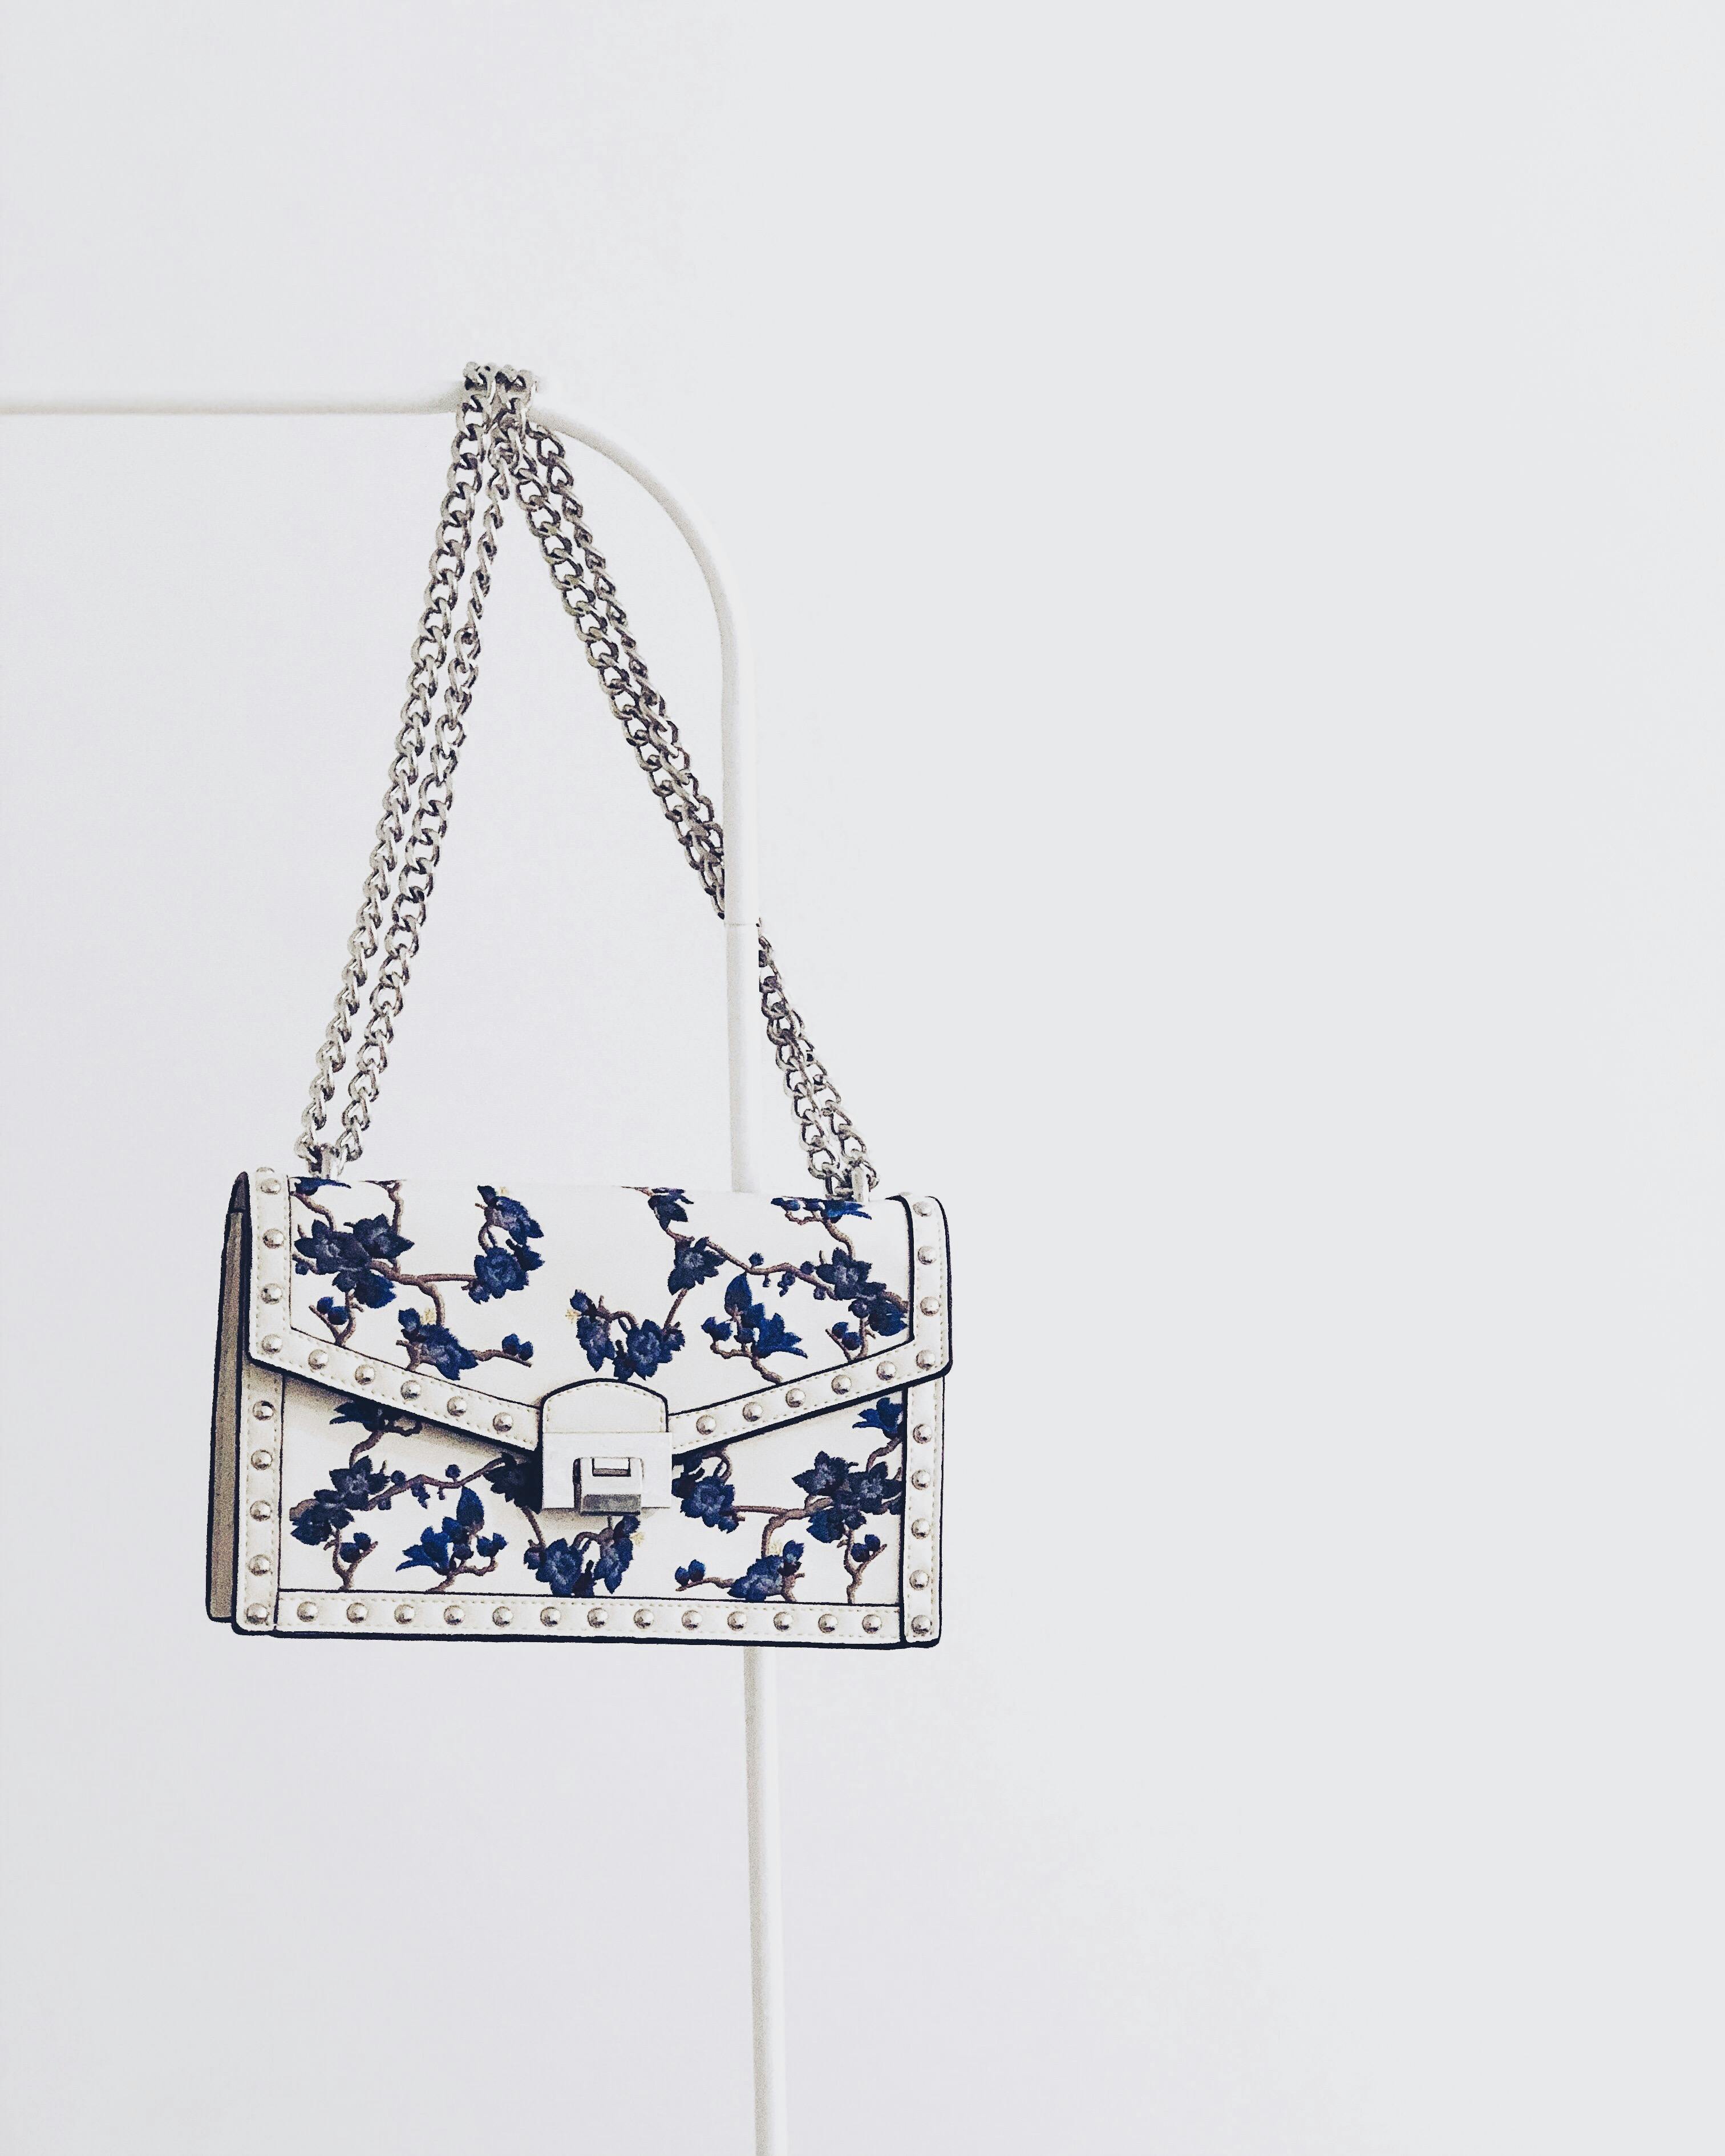 A bag with blue details | Source: Pexels